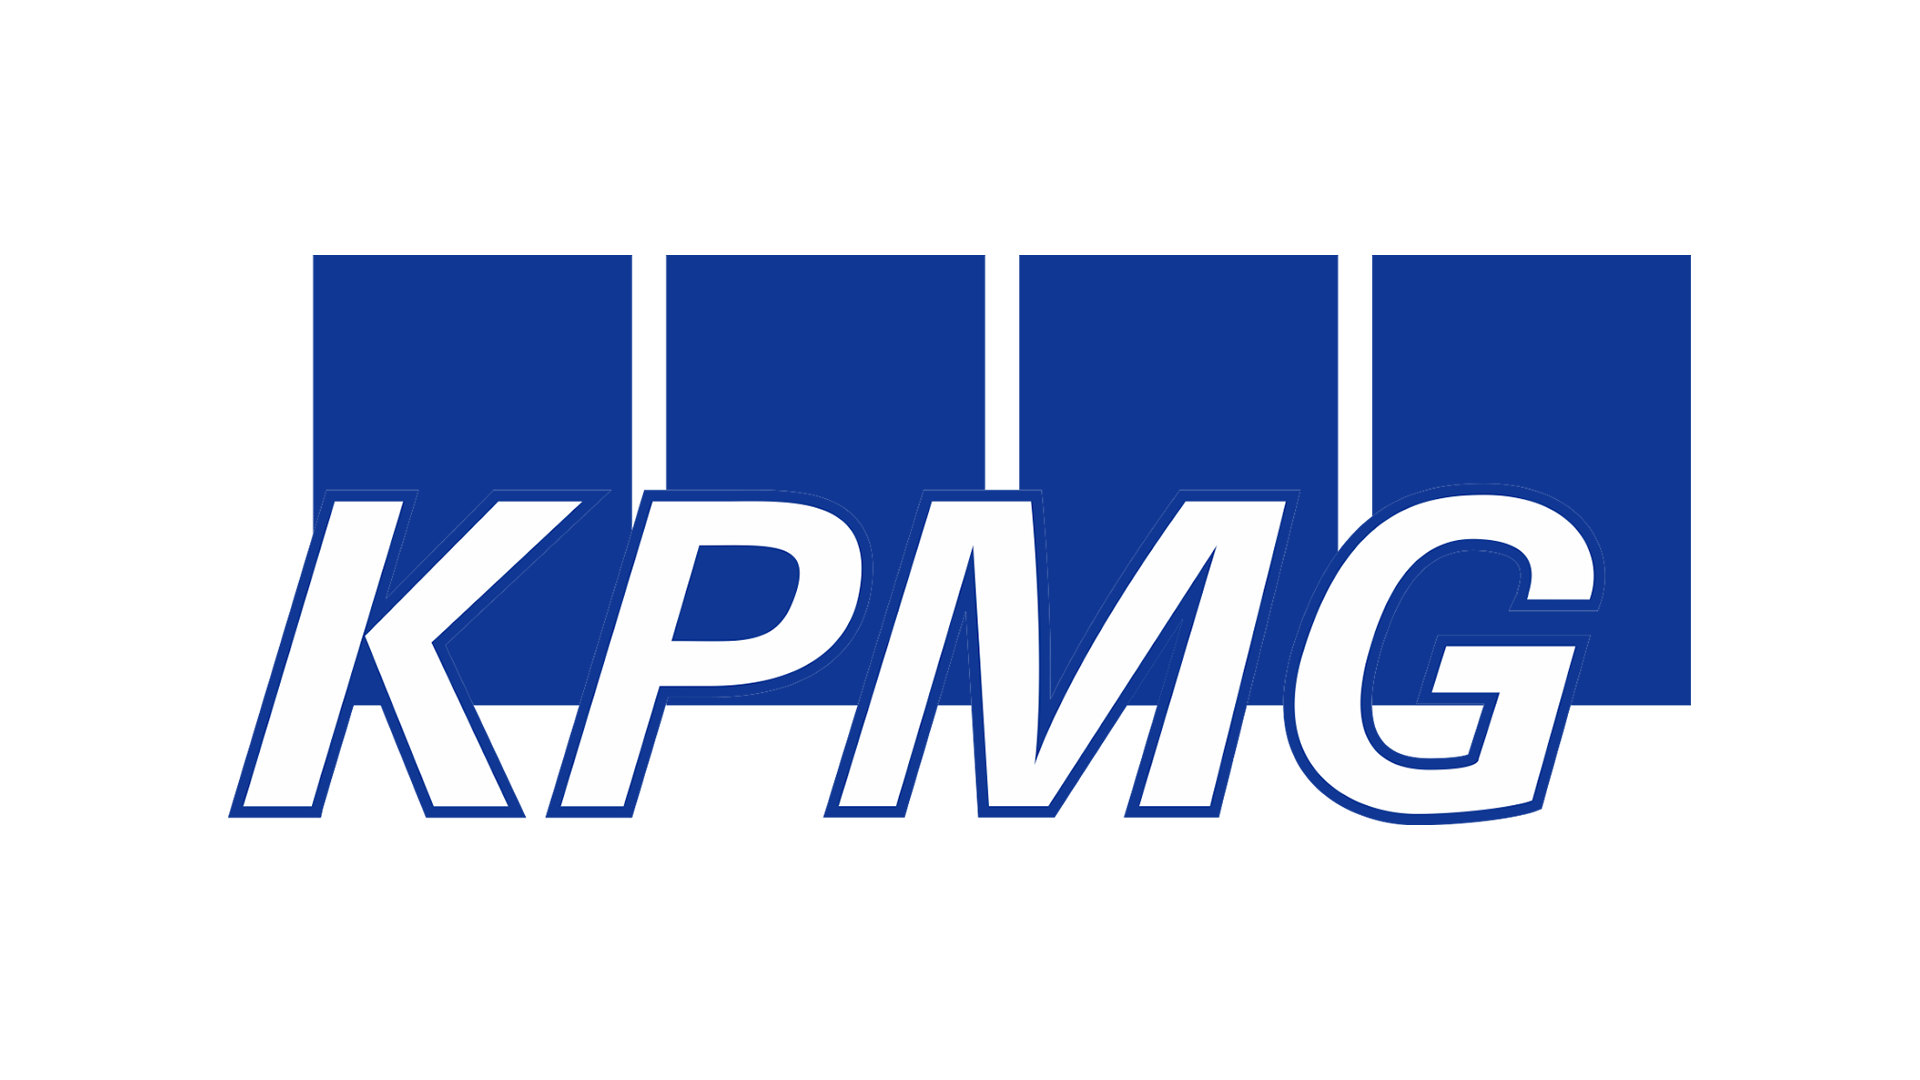 KPMG Neon Sign Vancouver